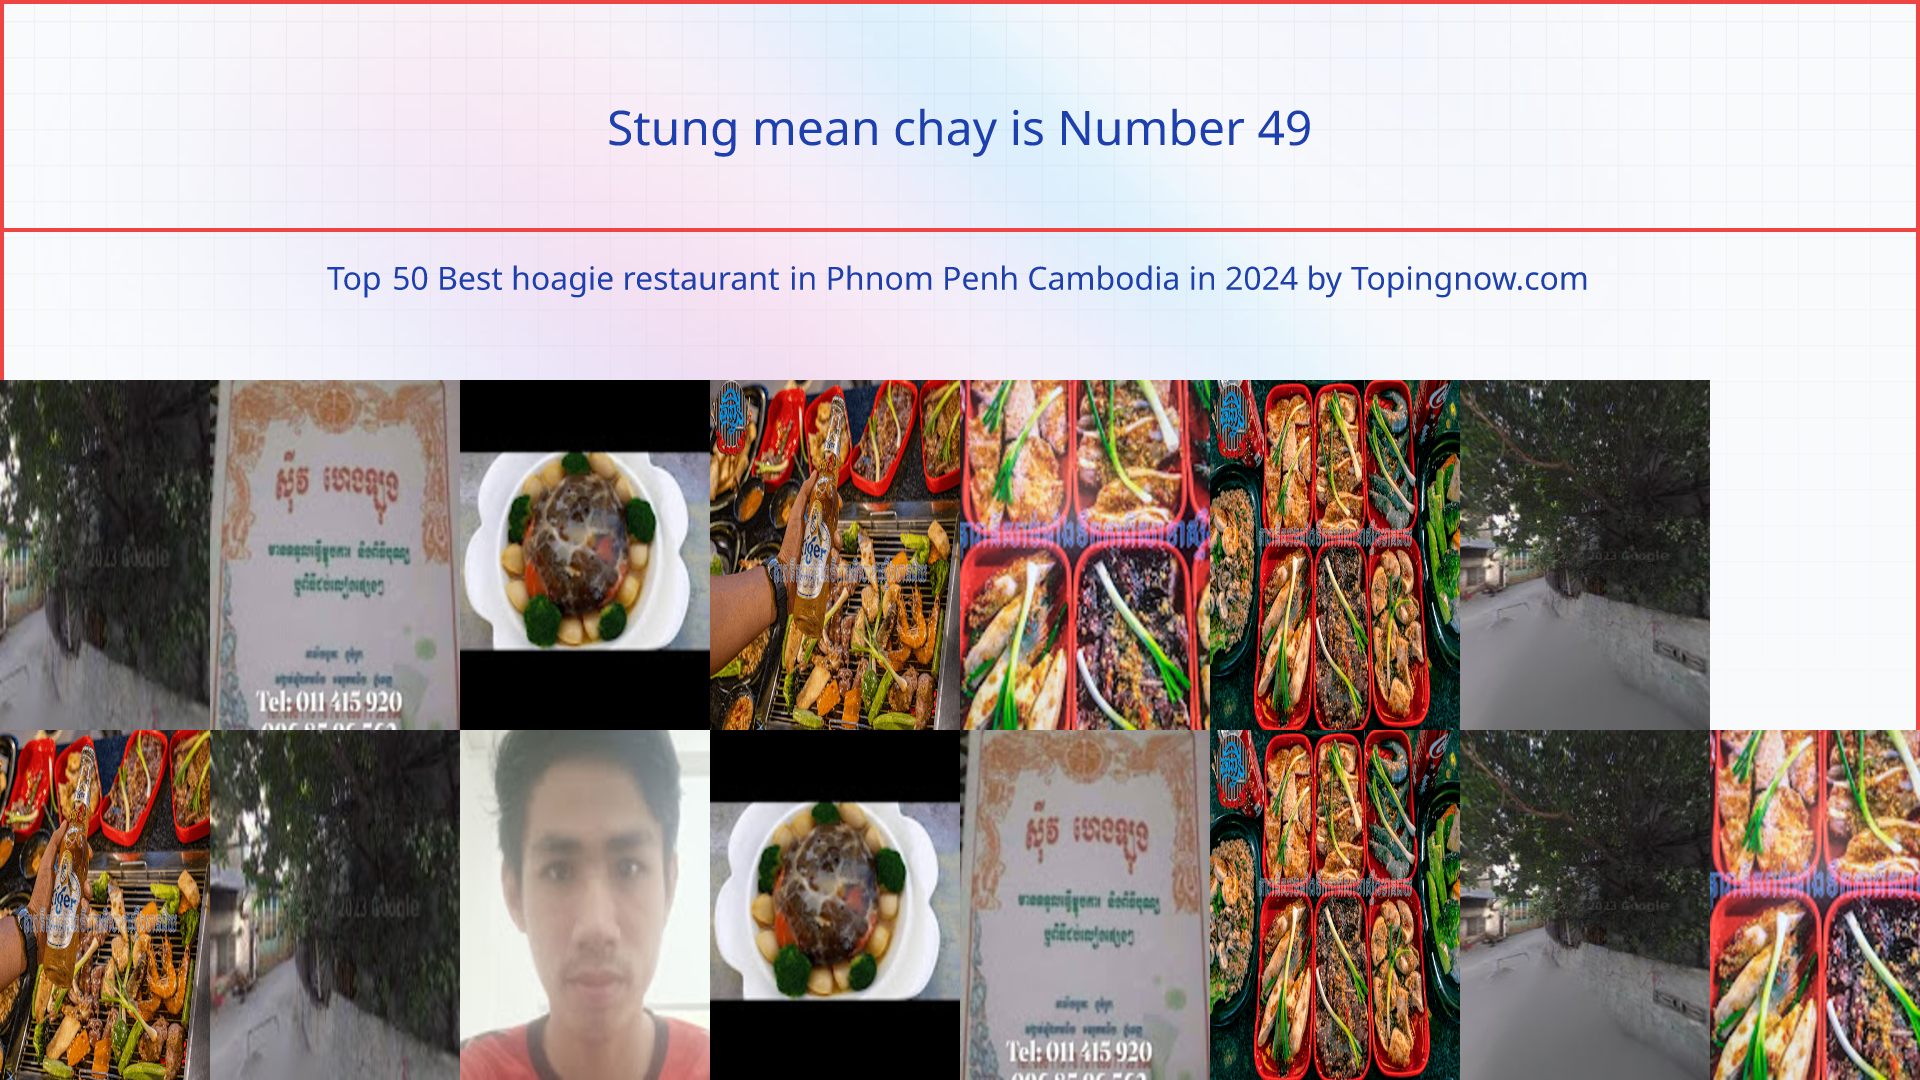 Stung mean chay: Top 50 Best hoagie restaurant in Phnom Penh Cambodia in 2024